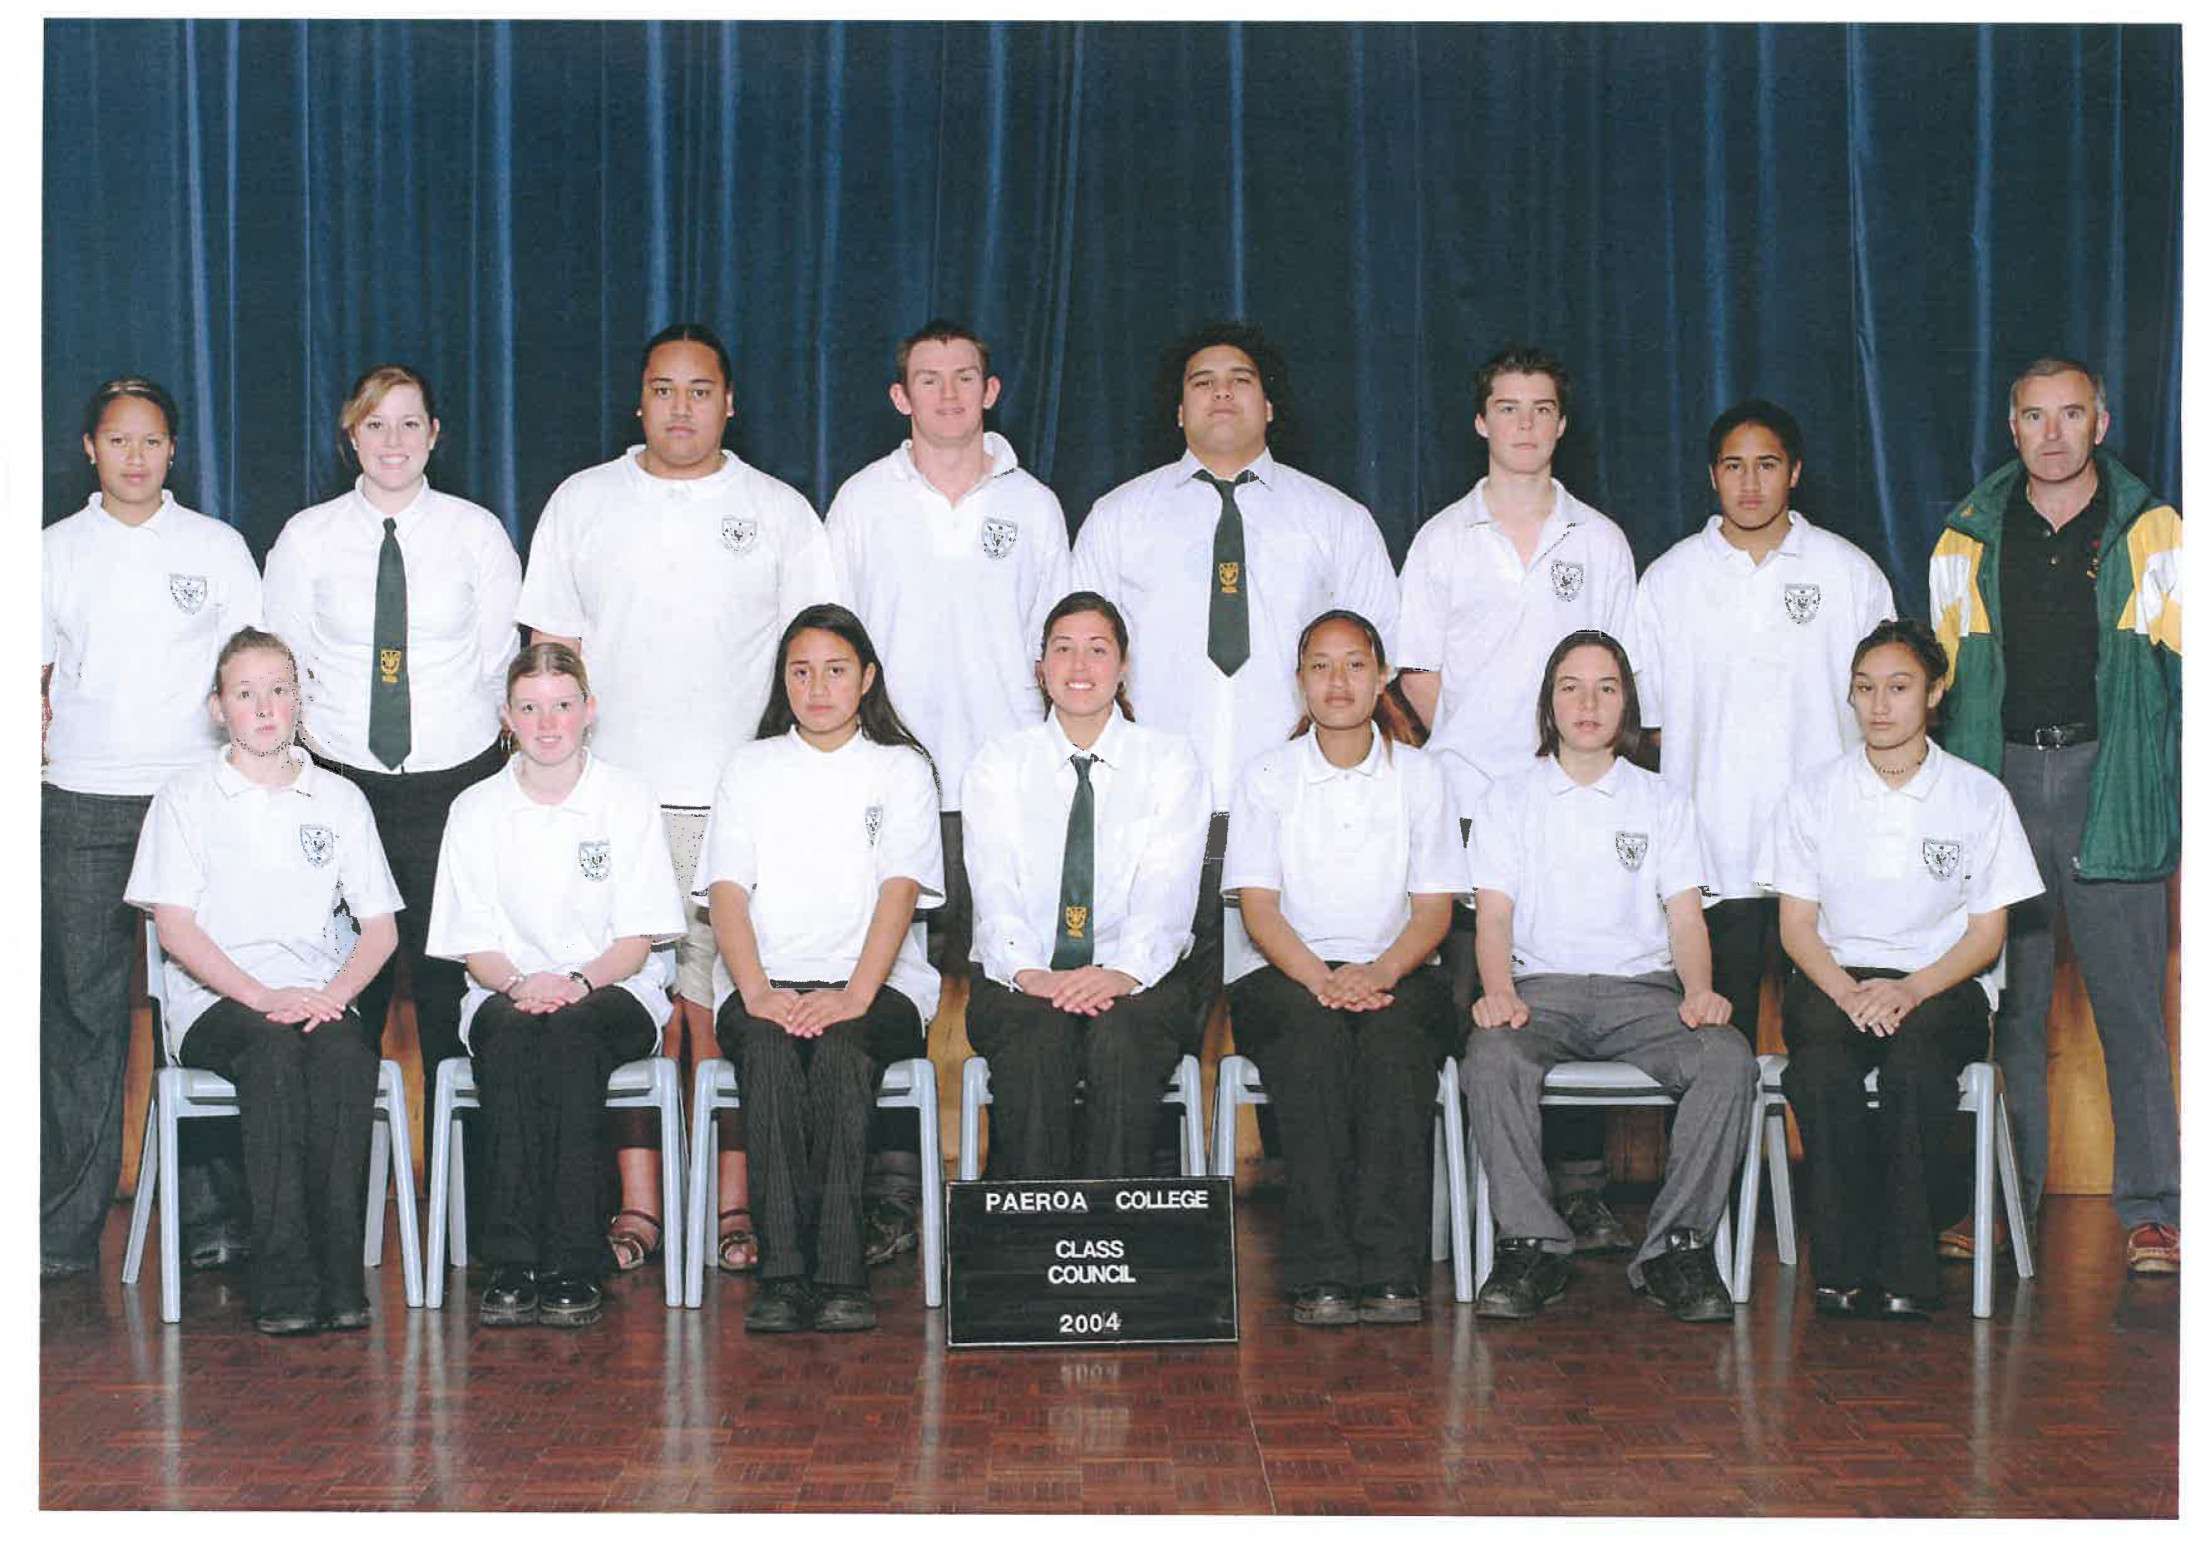 2004 Class Council